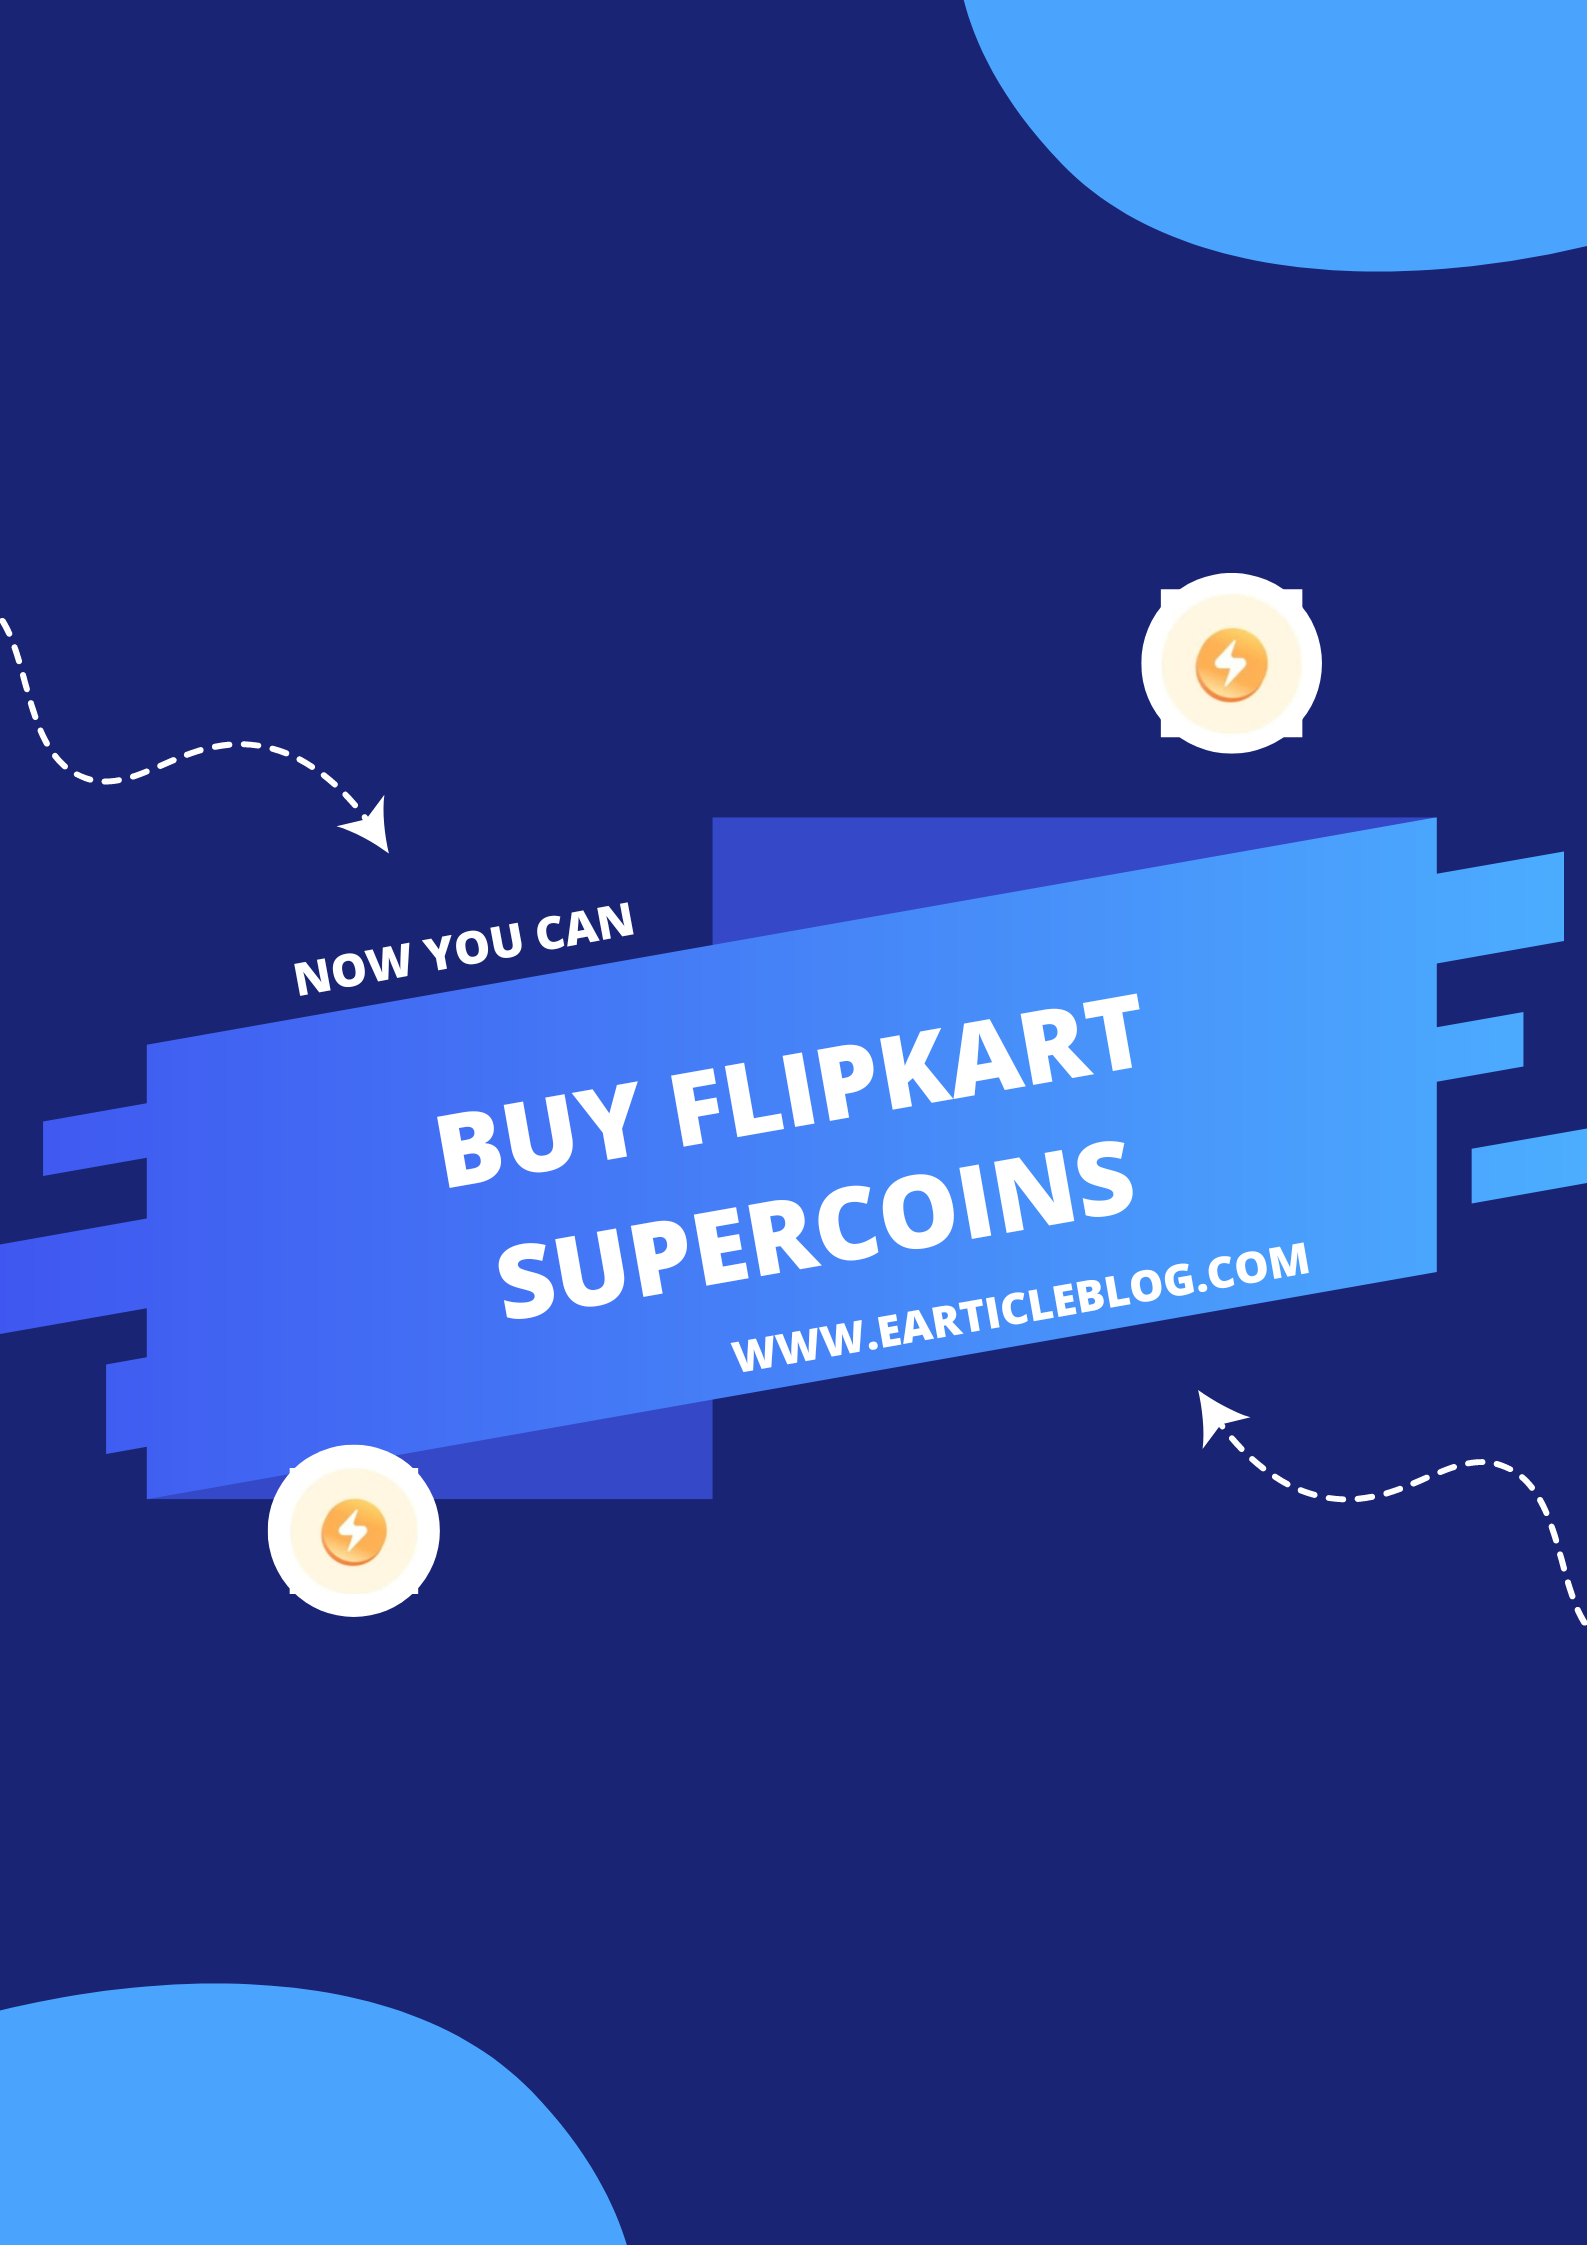 Buy Flipkart supercoins